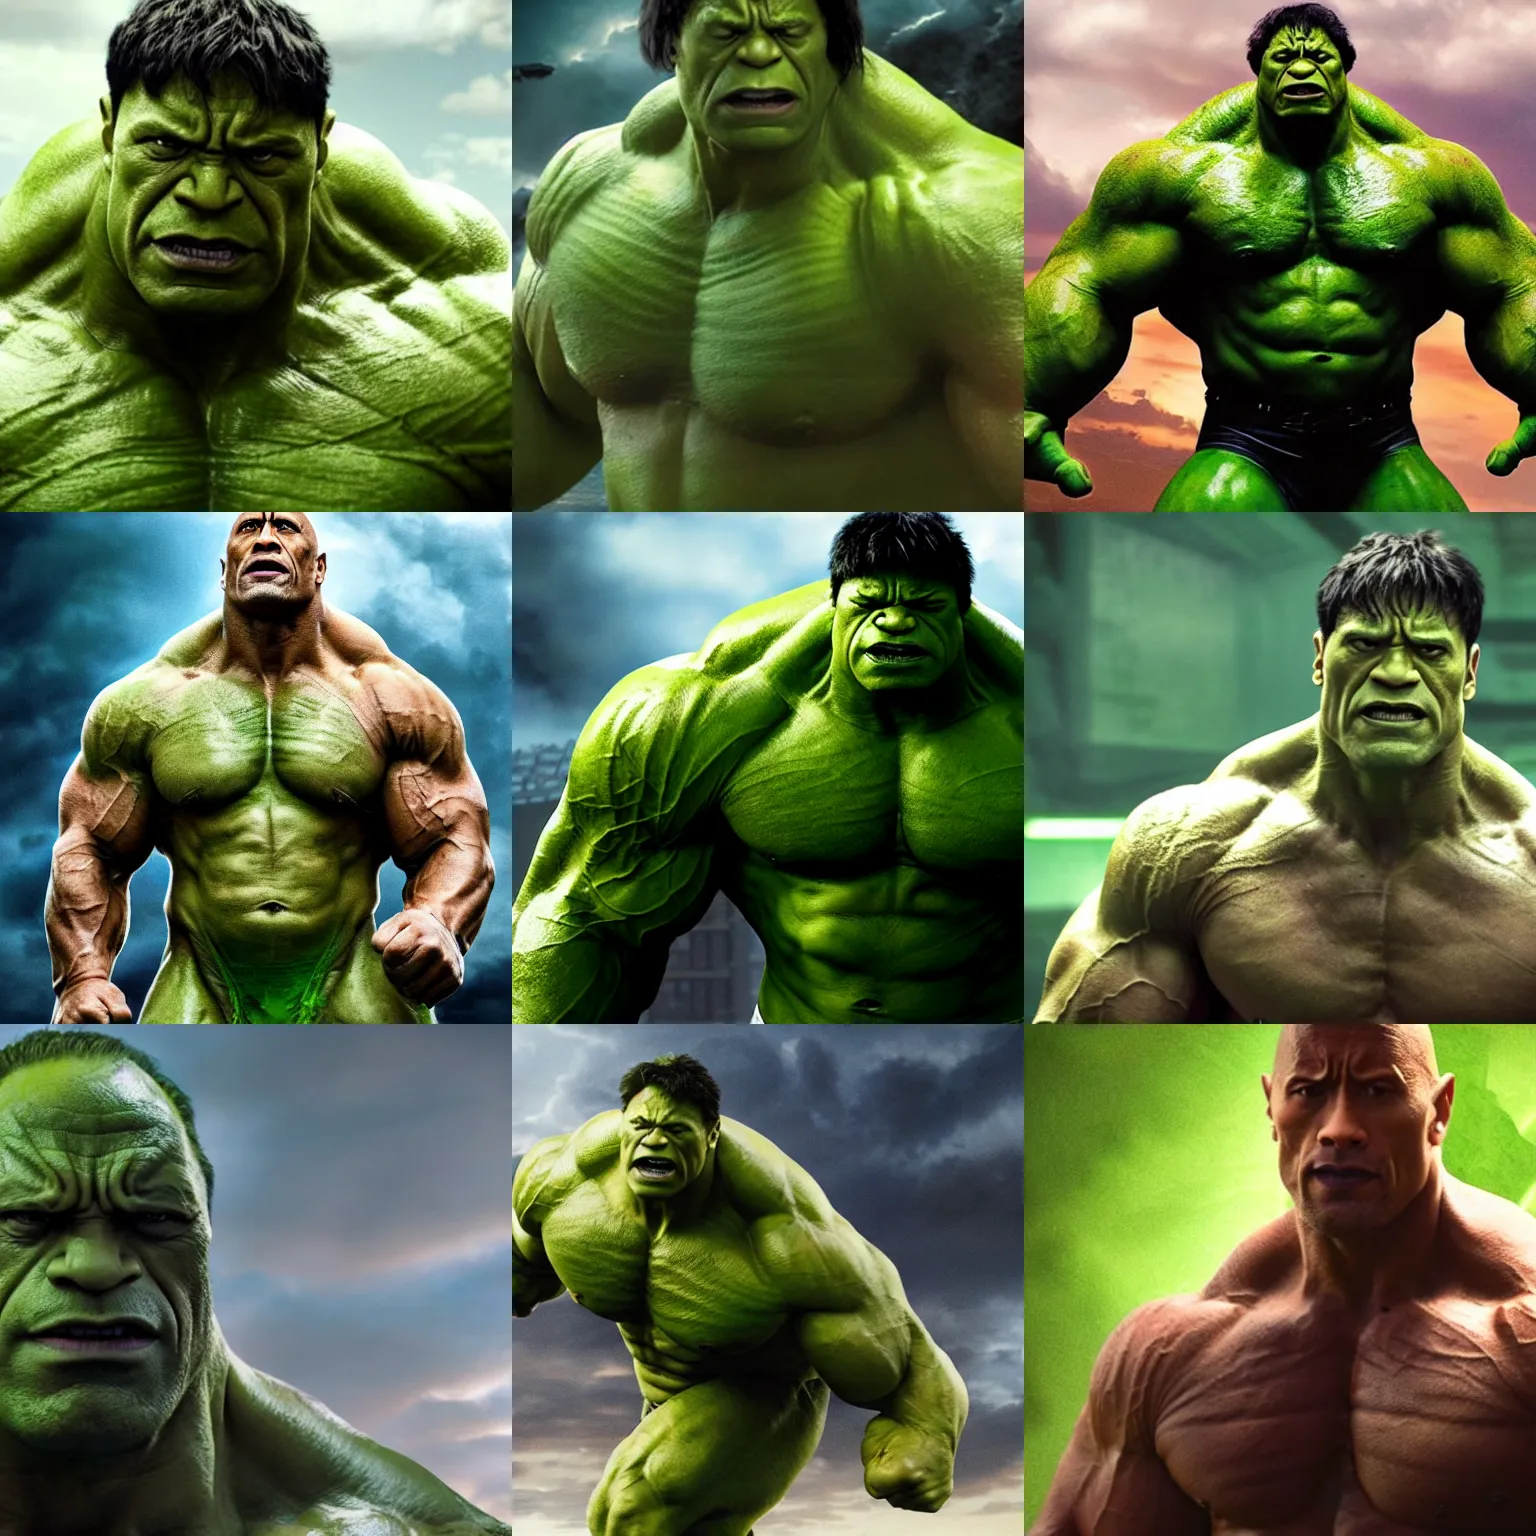 Prompt: dwayne johnson as hulk, marvel cinematic universe, mcu, 4 k, raw, unedited, green skin, symmetrical balance, in - frame